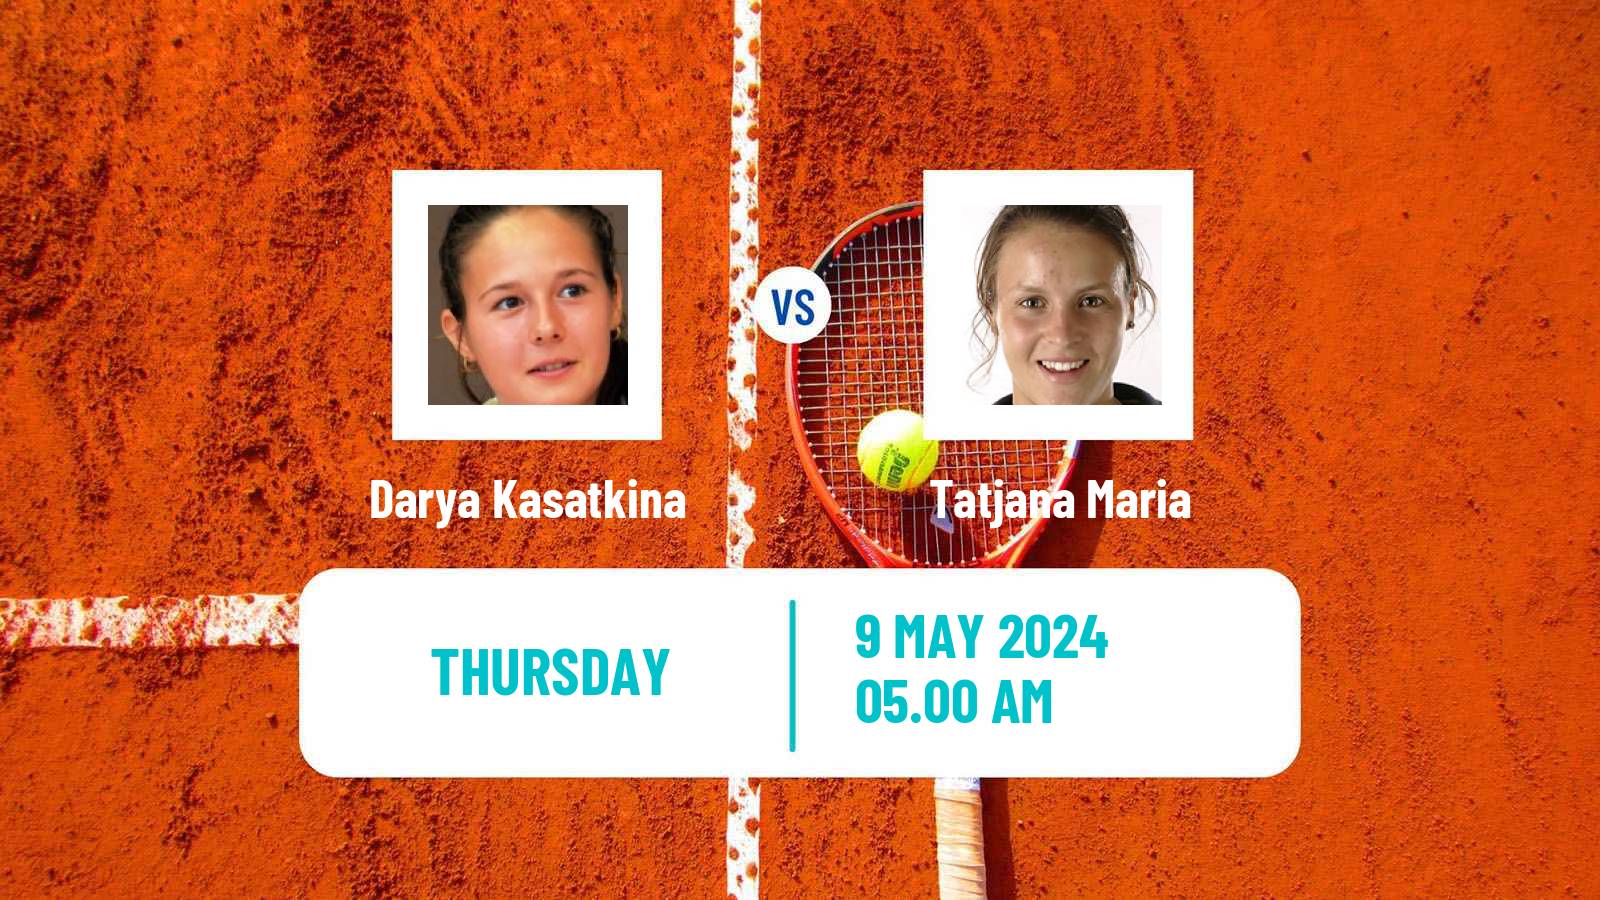 Tennis WTA Roma Darya Kasatkina - Tatjana Maria